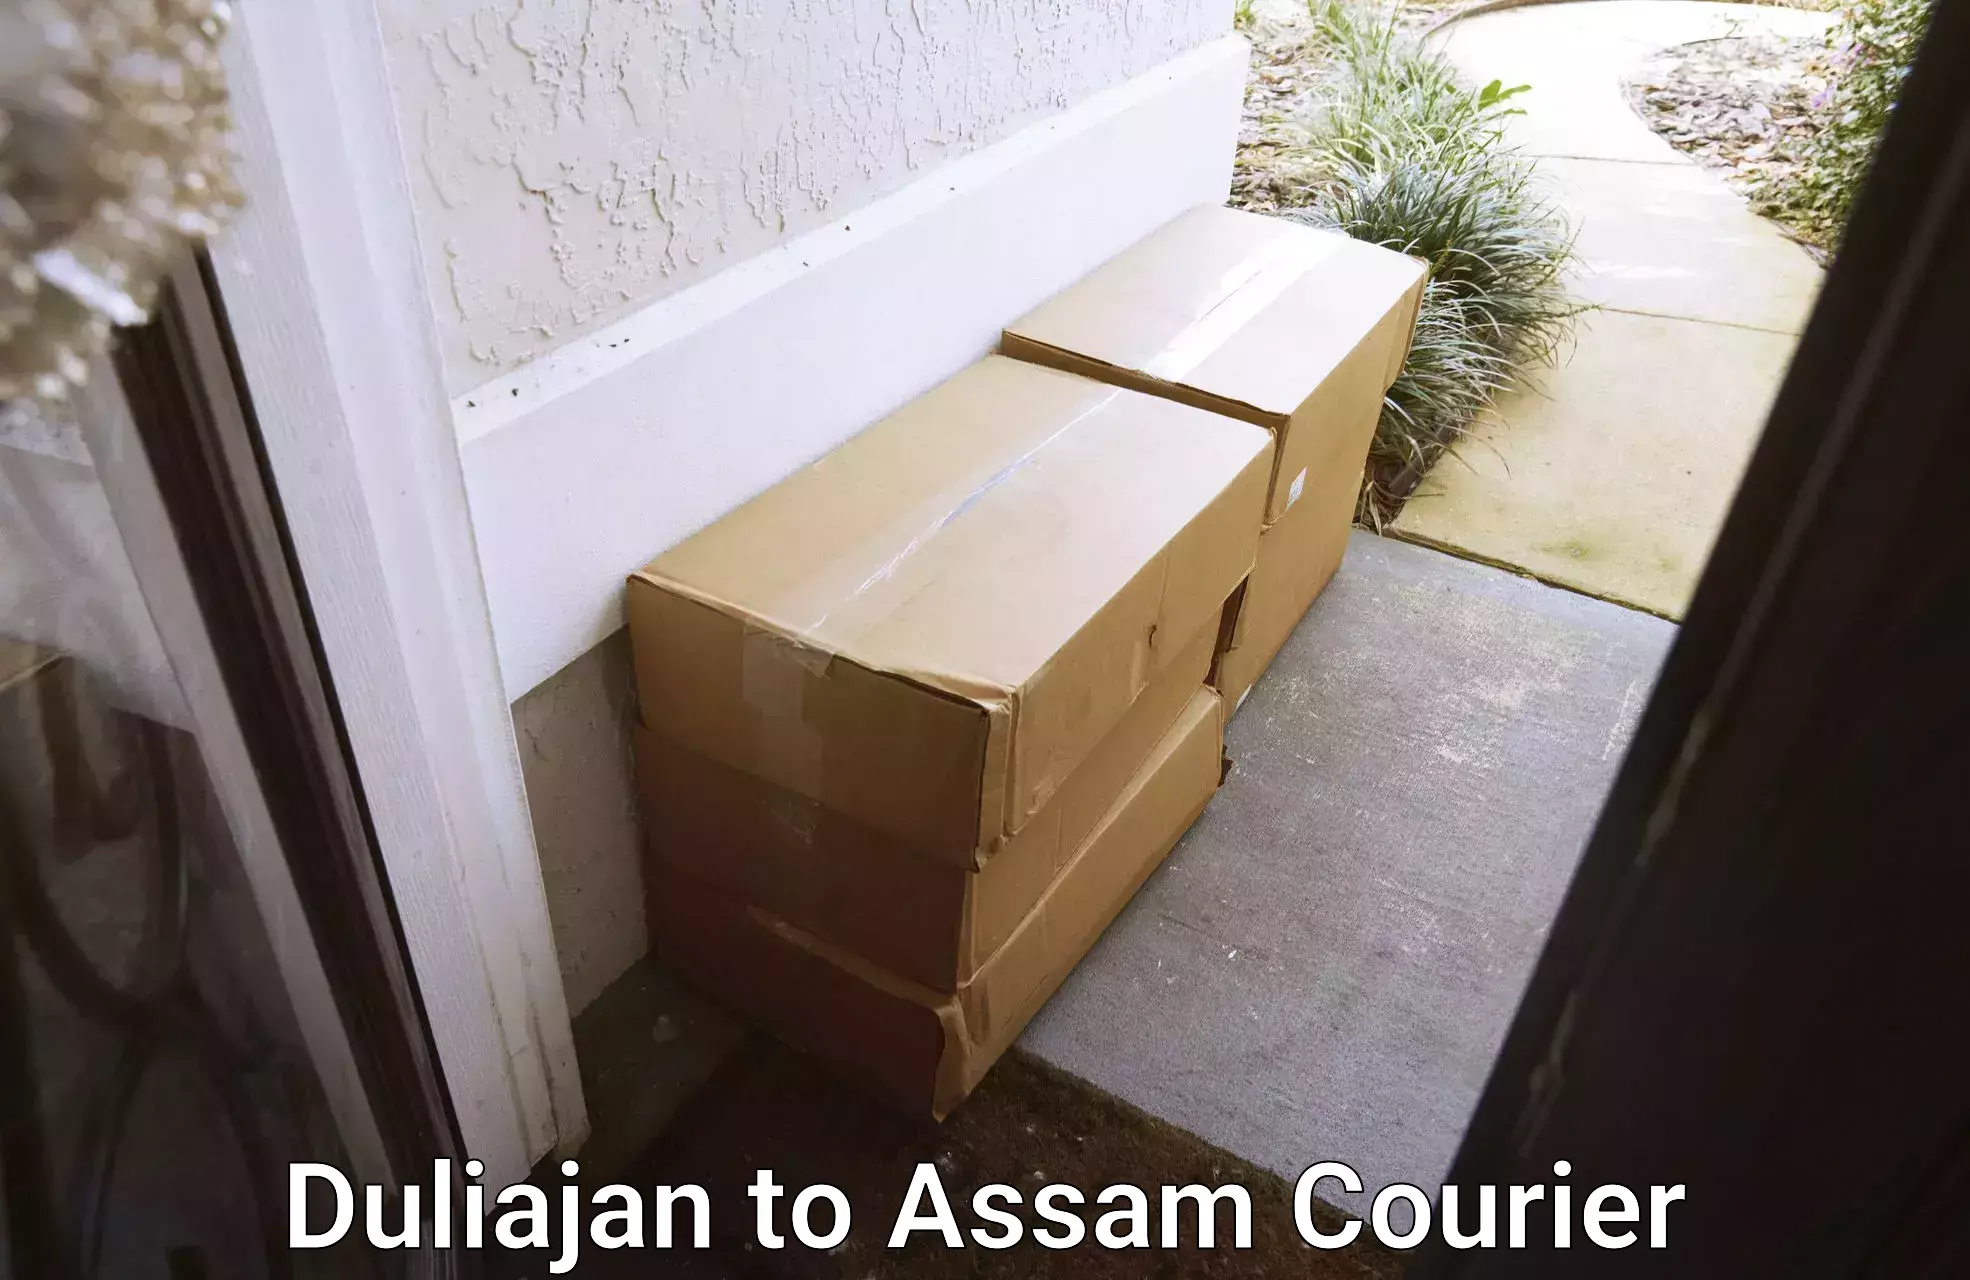 Nationwide delivery network Duliajan to Baihata